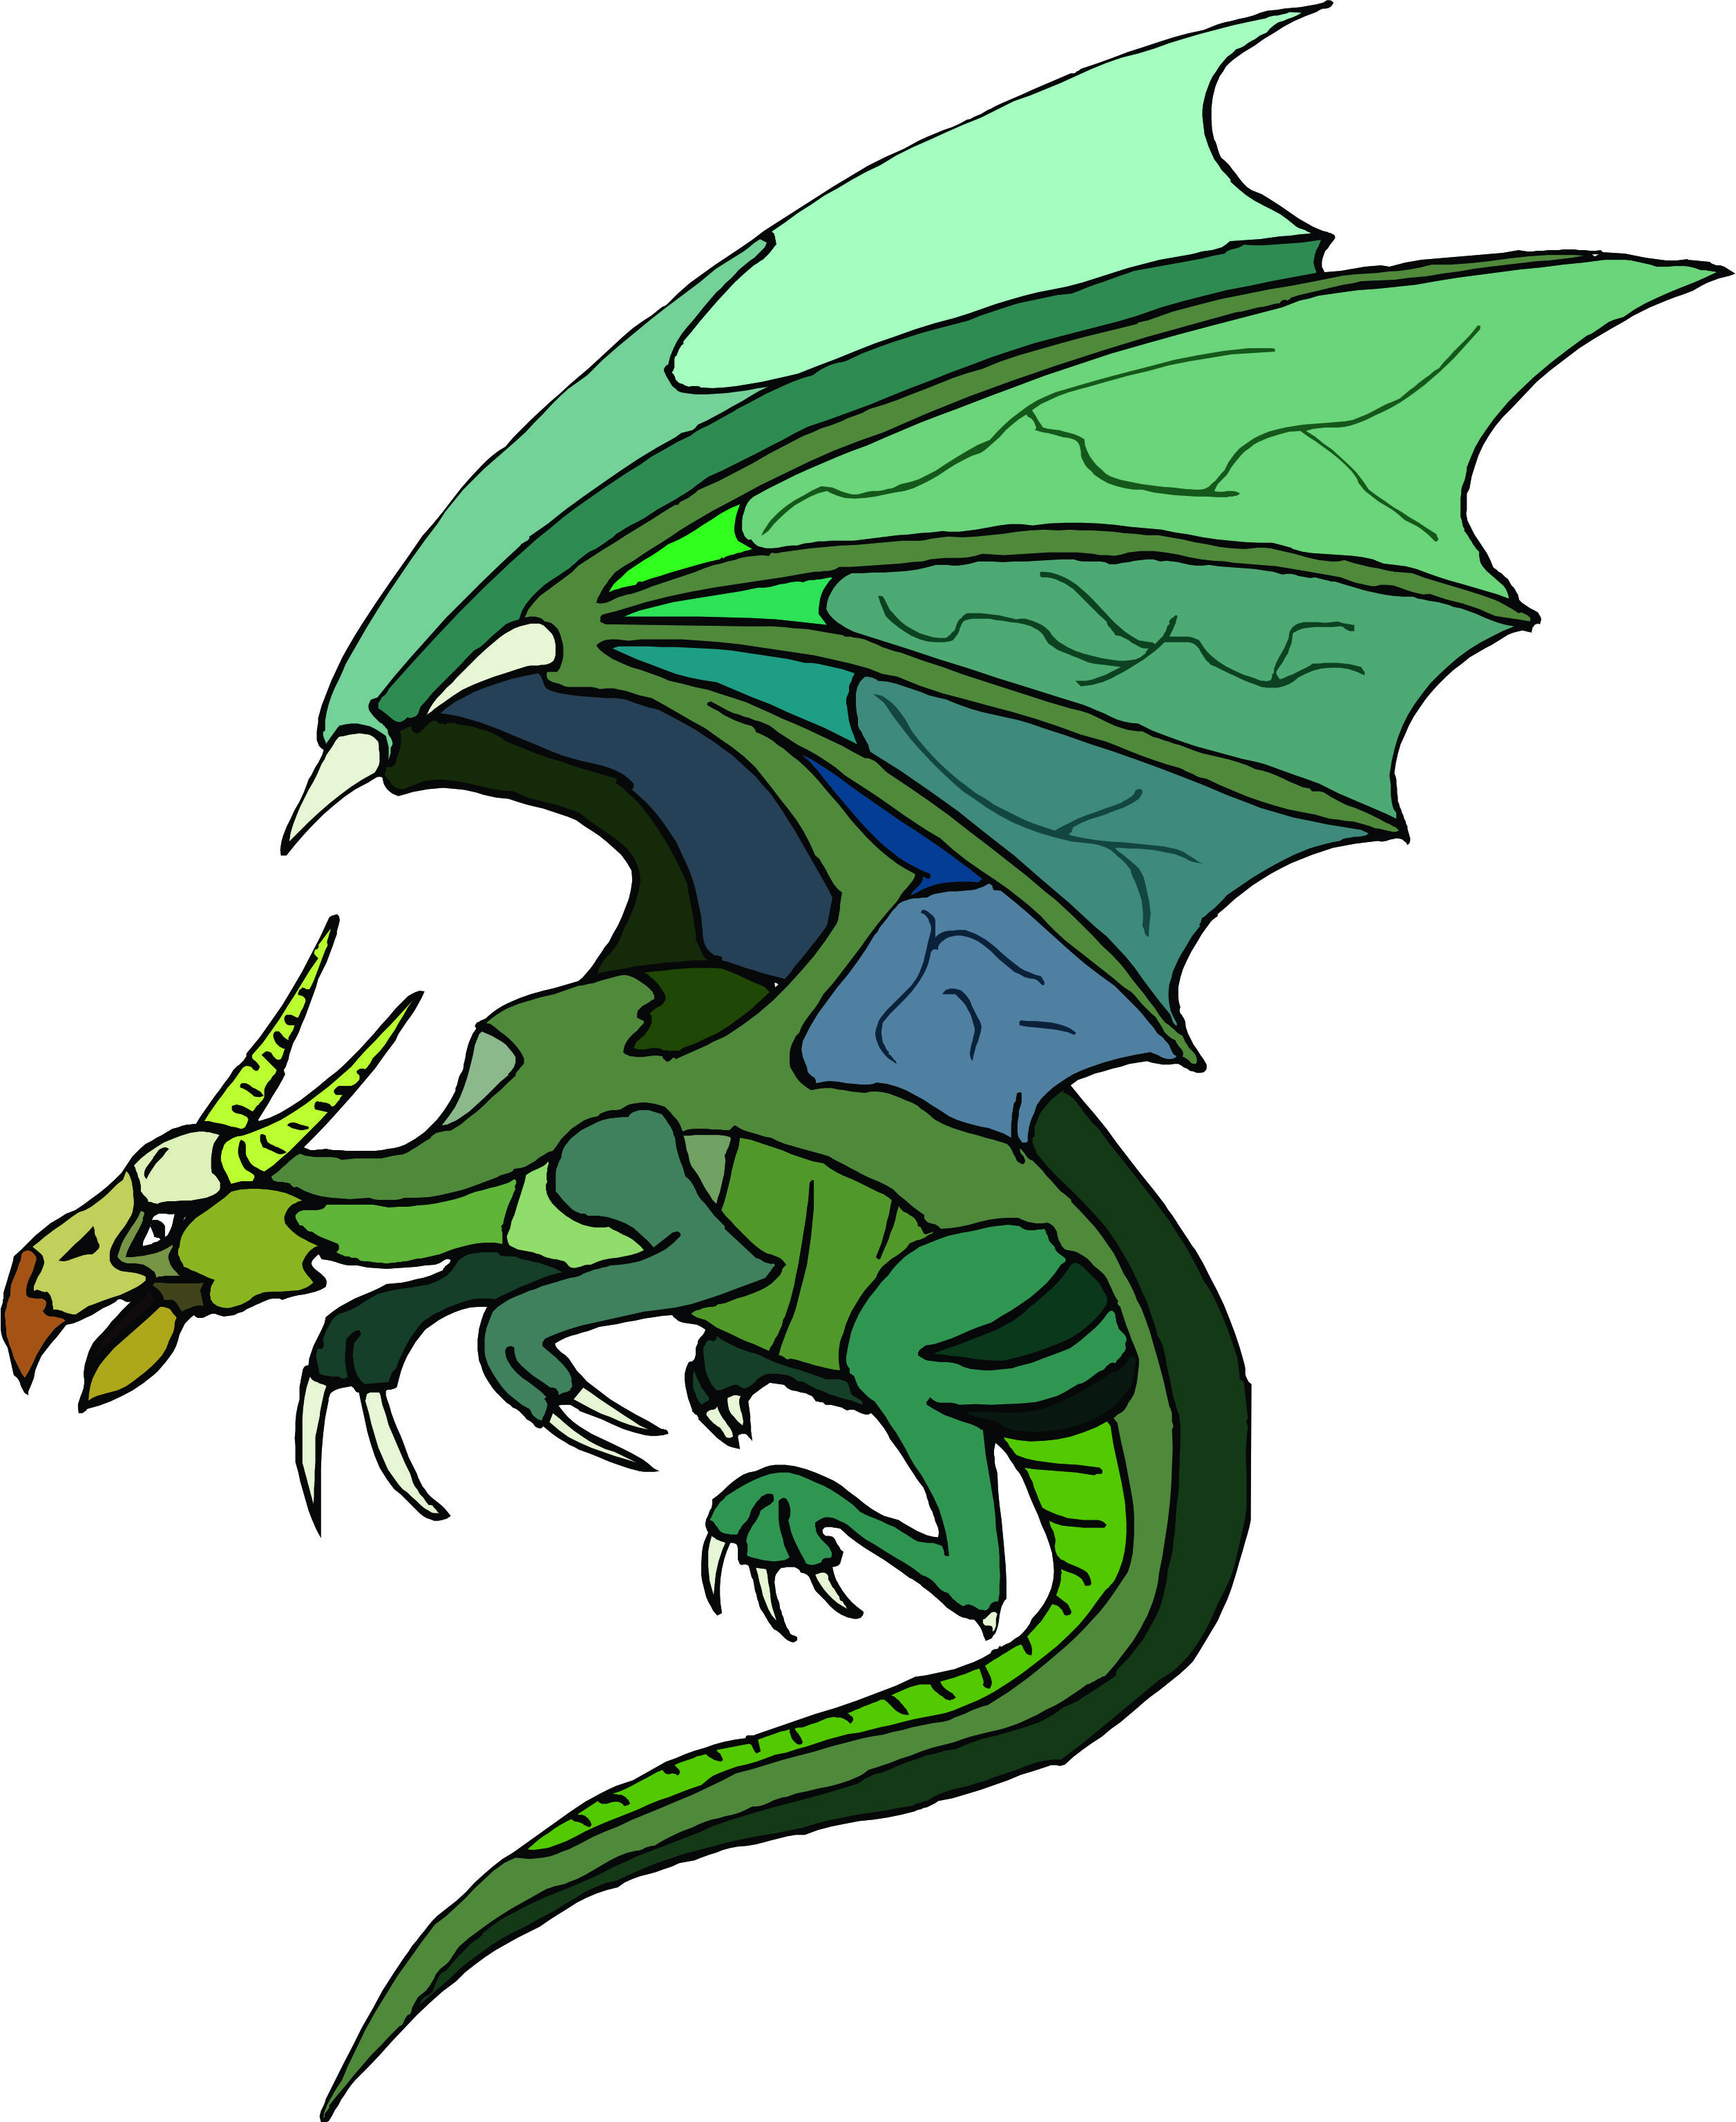 Green Dragon Cartoon Stock Vector 66570403 Shutterstock on ...